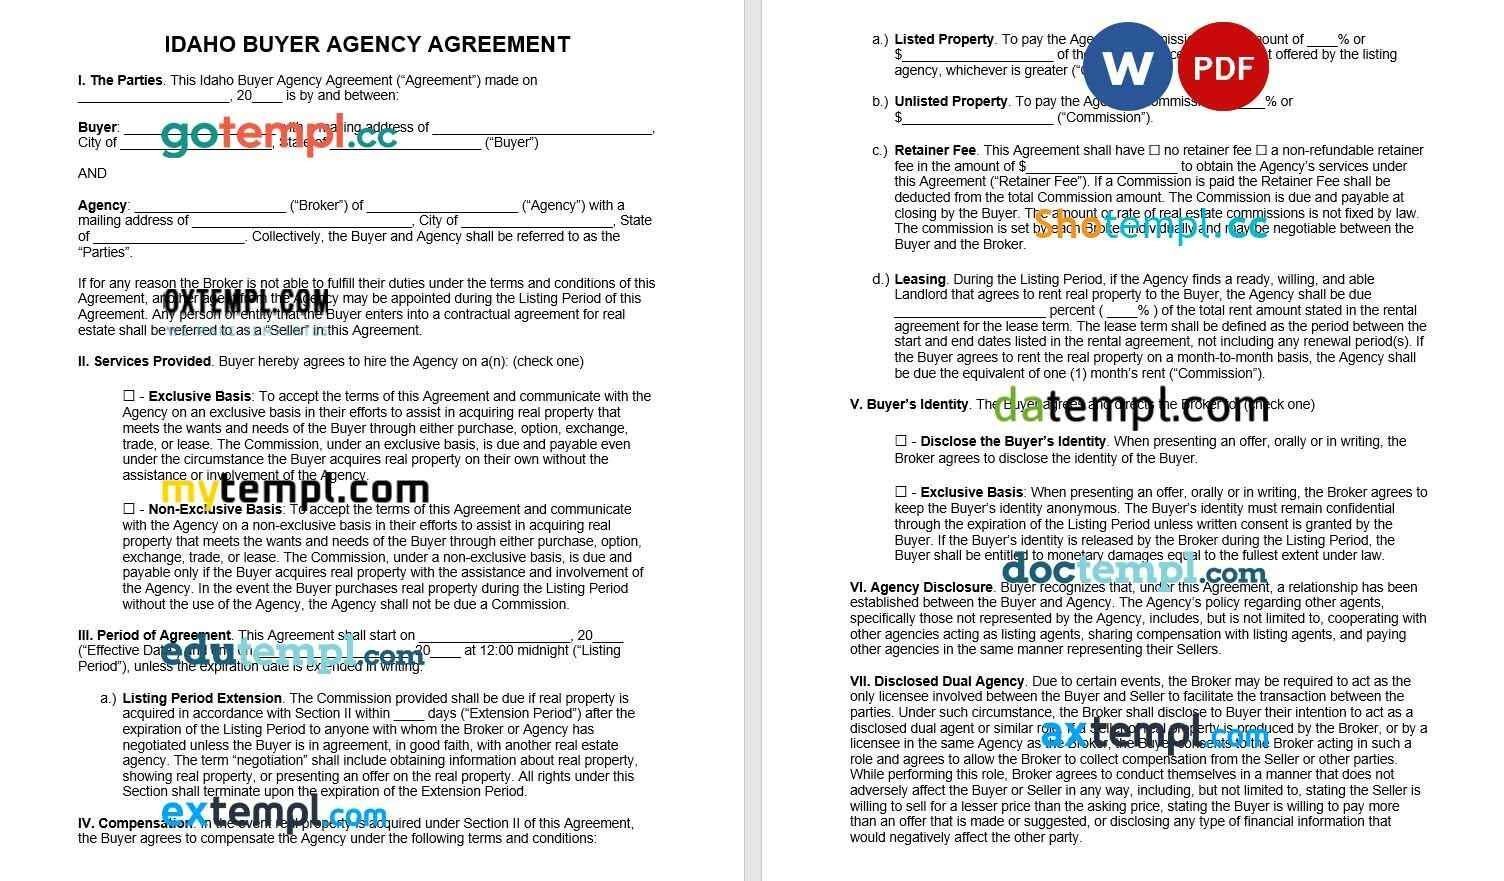 Idaho Buyer Agency Agreement Word example, fully editable